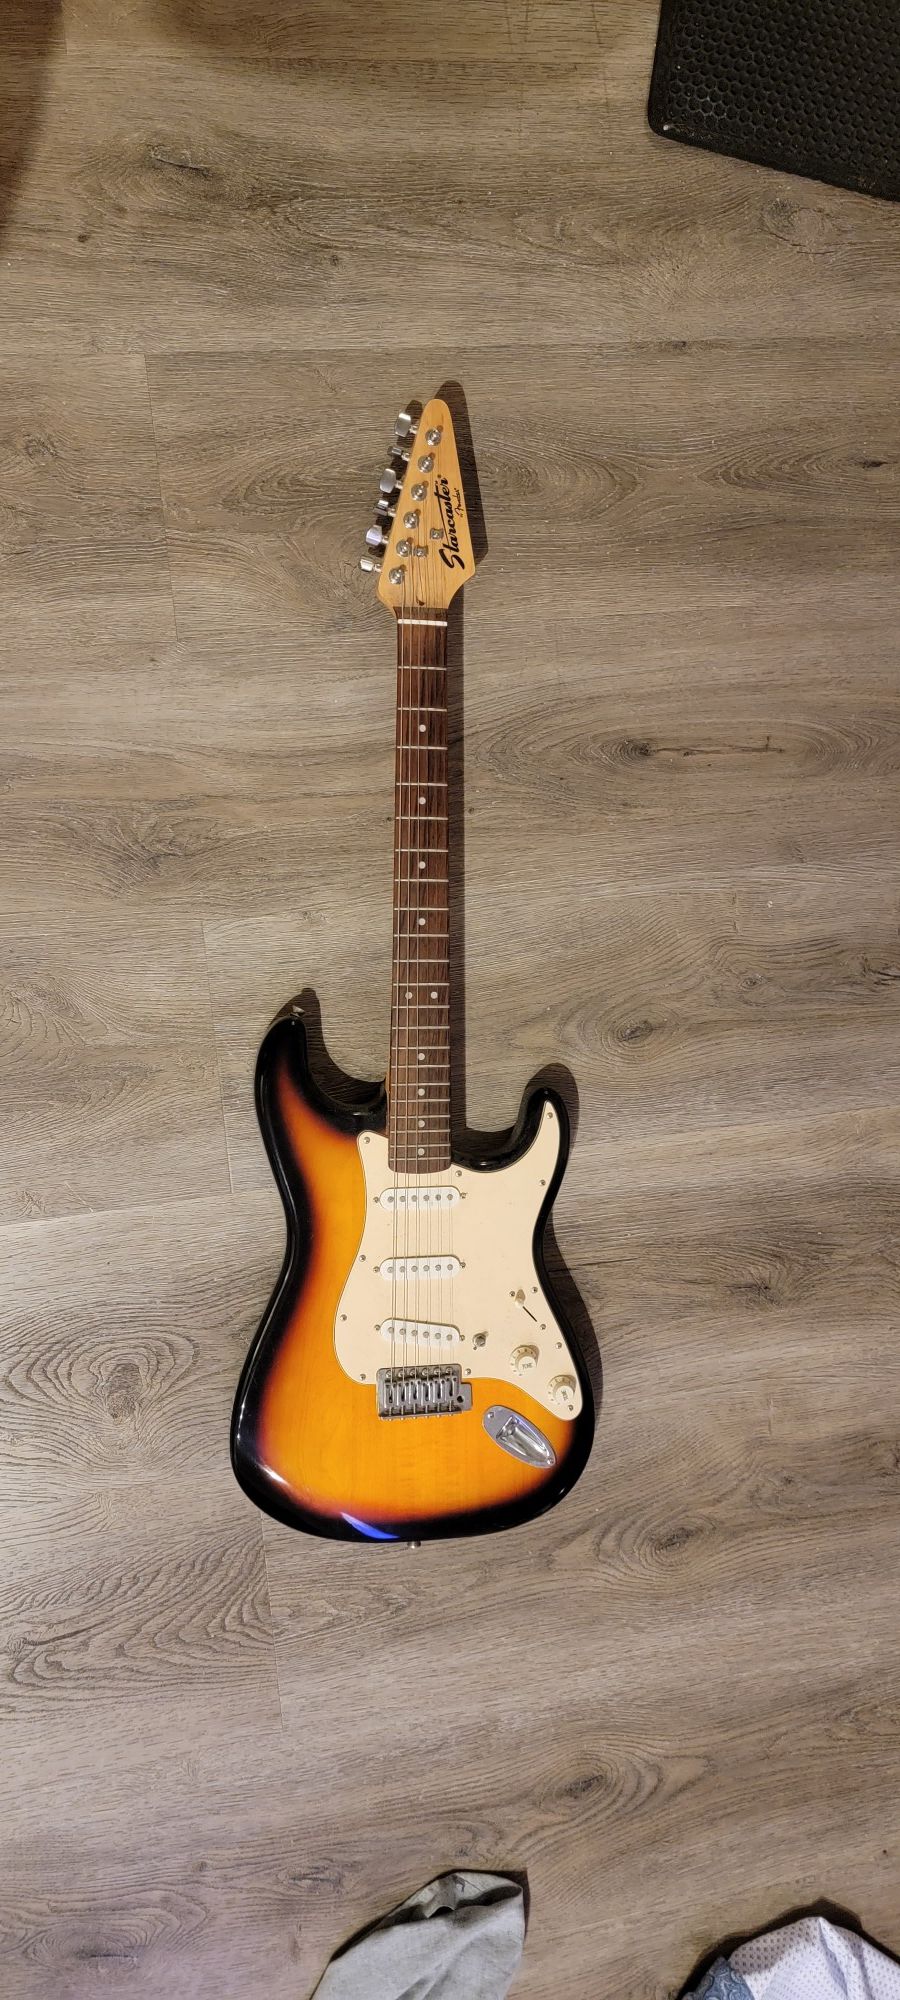 Sunburst Starcaster Electric Guitar by Fender 